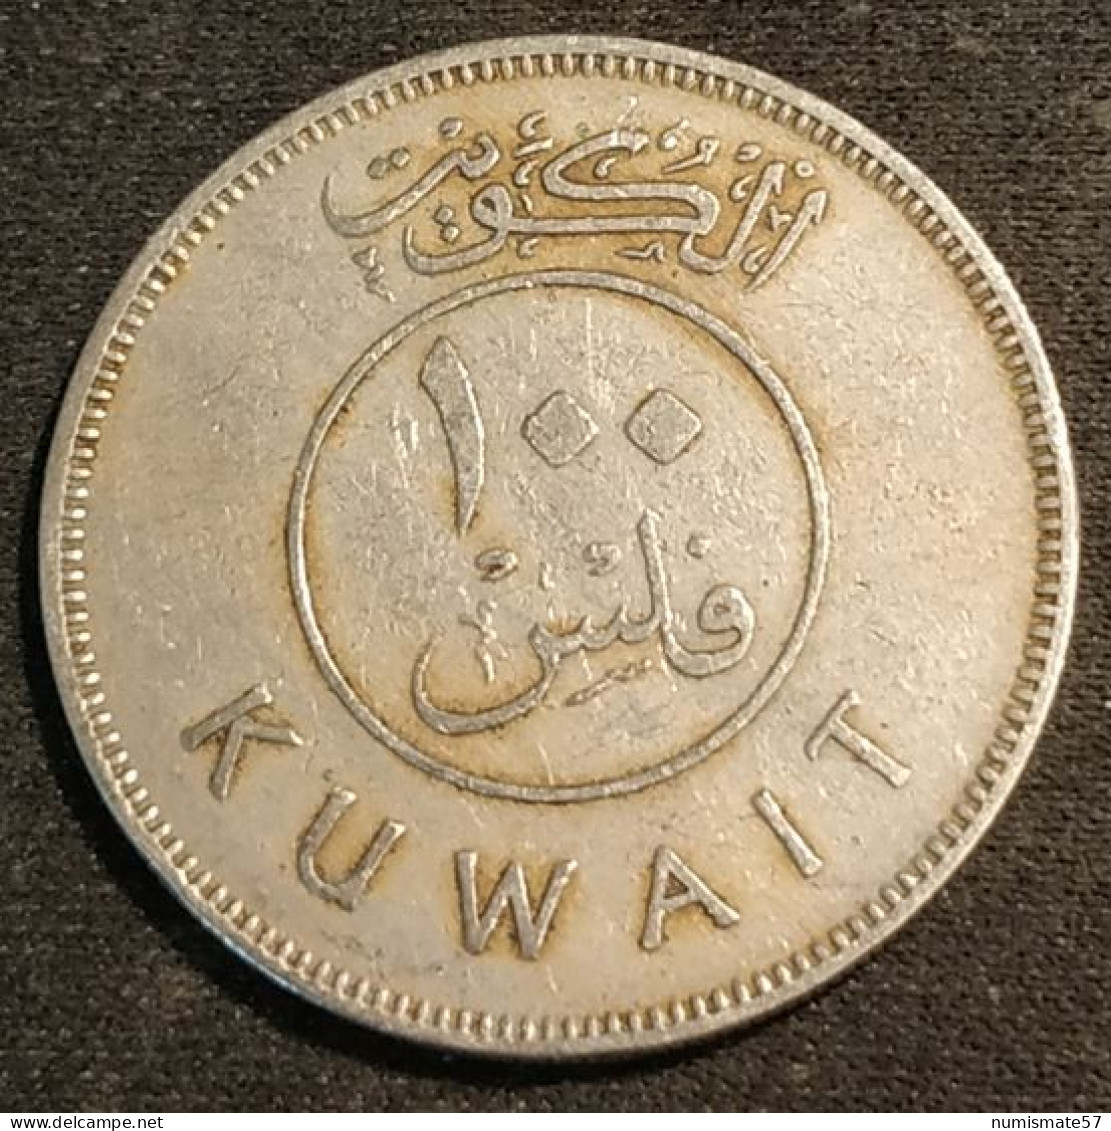 Pas Courant - KOWEIT - KUWAIT - 100 FILS 1964 ( 1384 ) - Jabir Ibn Ahmad - KM 14 - ( 160 000 Ex. ) - Kuwait